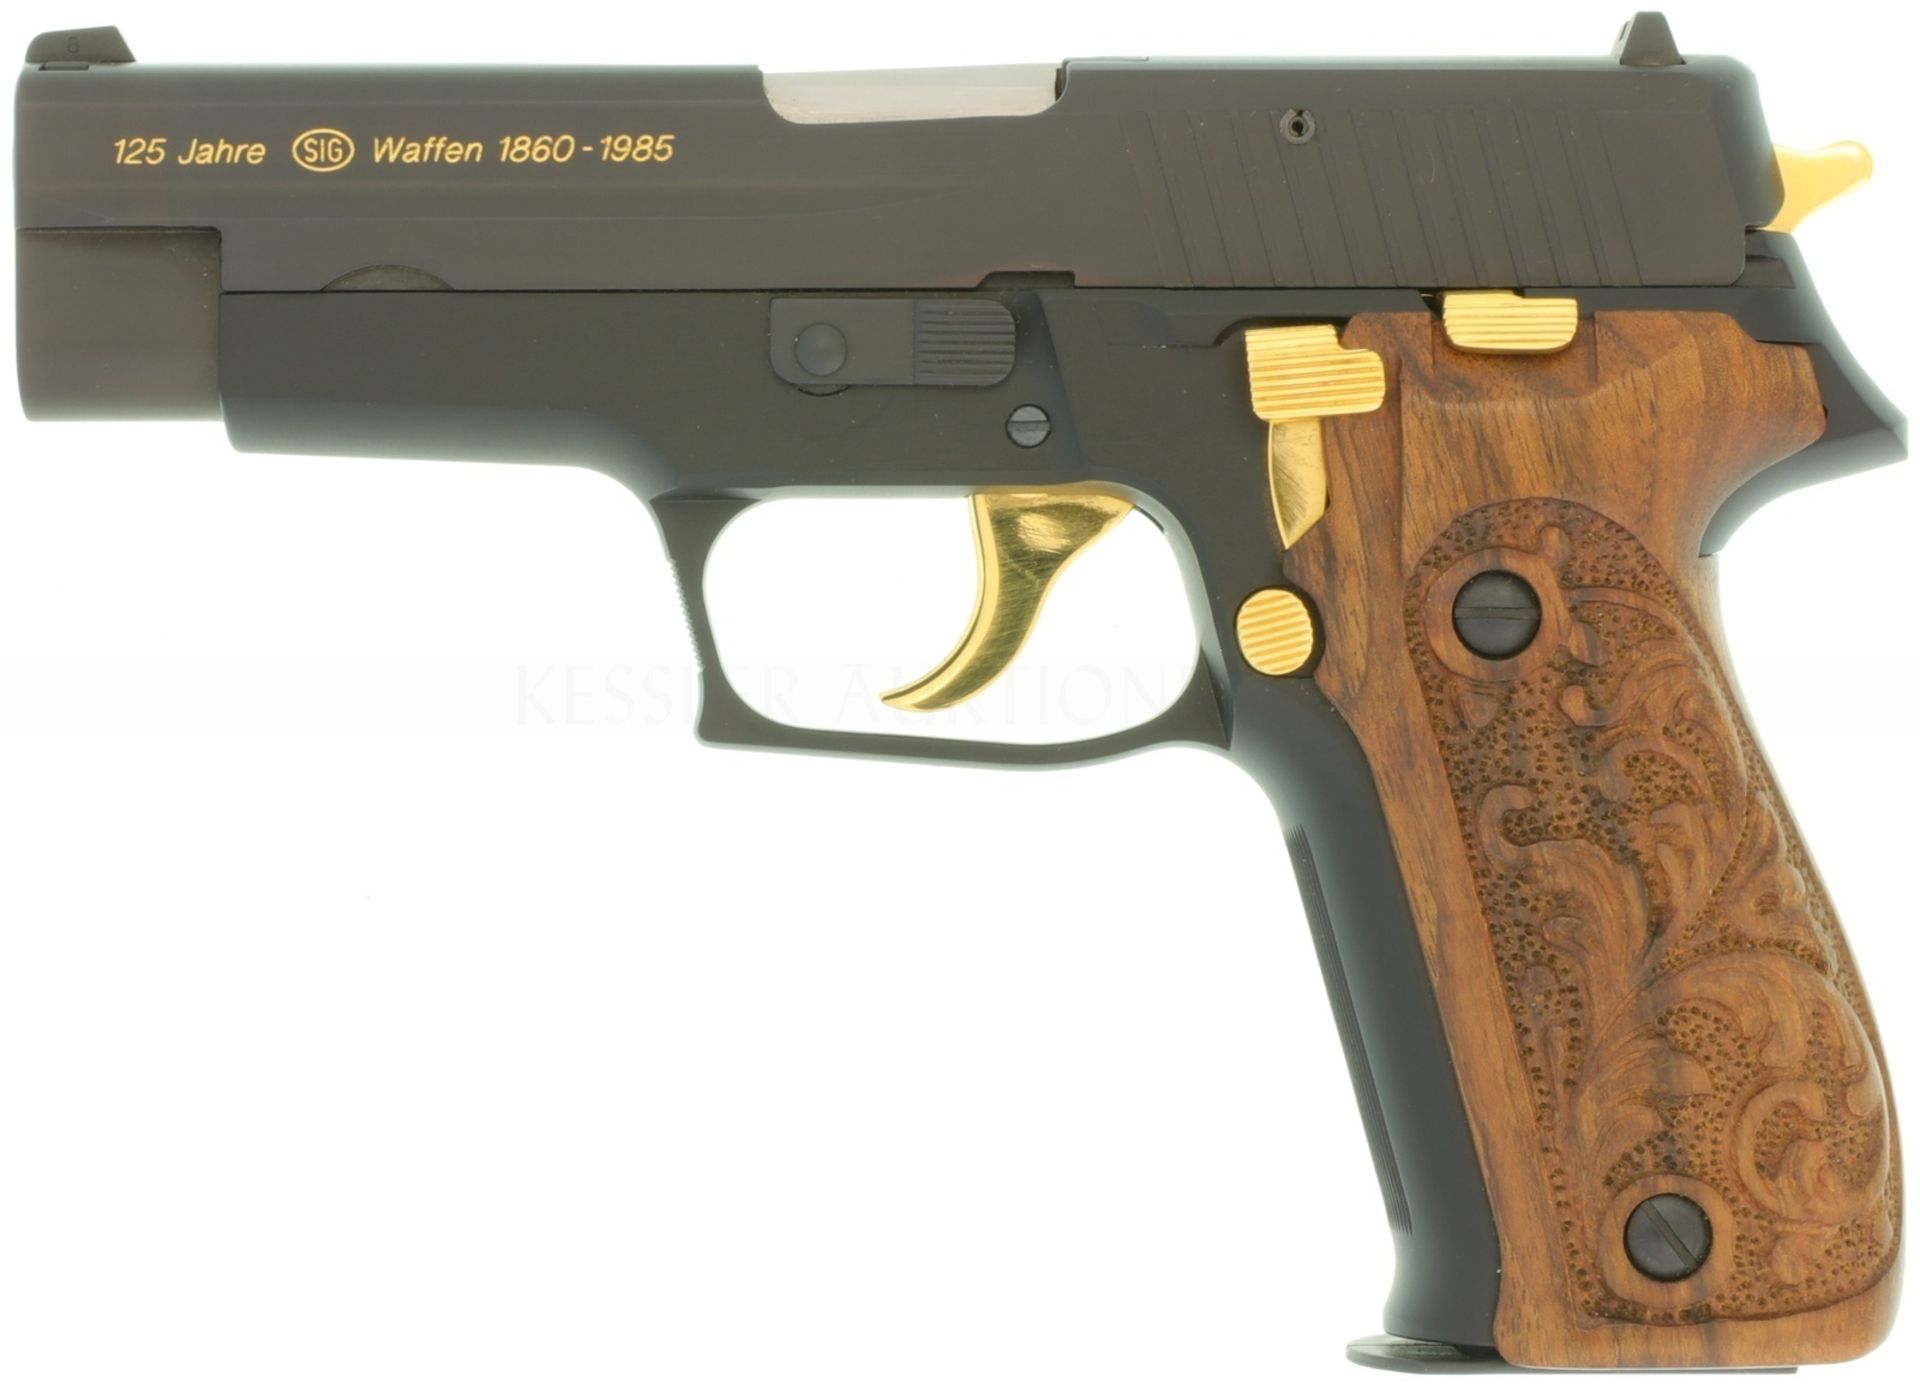 Jubiläums-Pistole, SIG-Sauer P226, 125 Jahre SIG Waffen 1860-1985. Kal. 9mmP